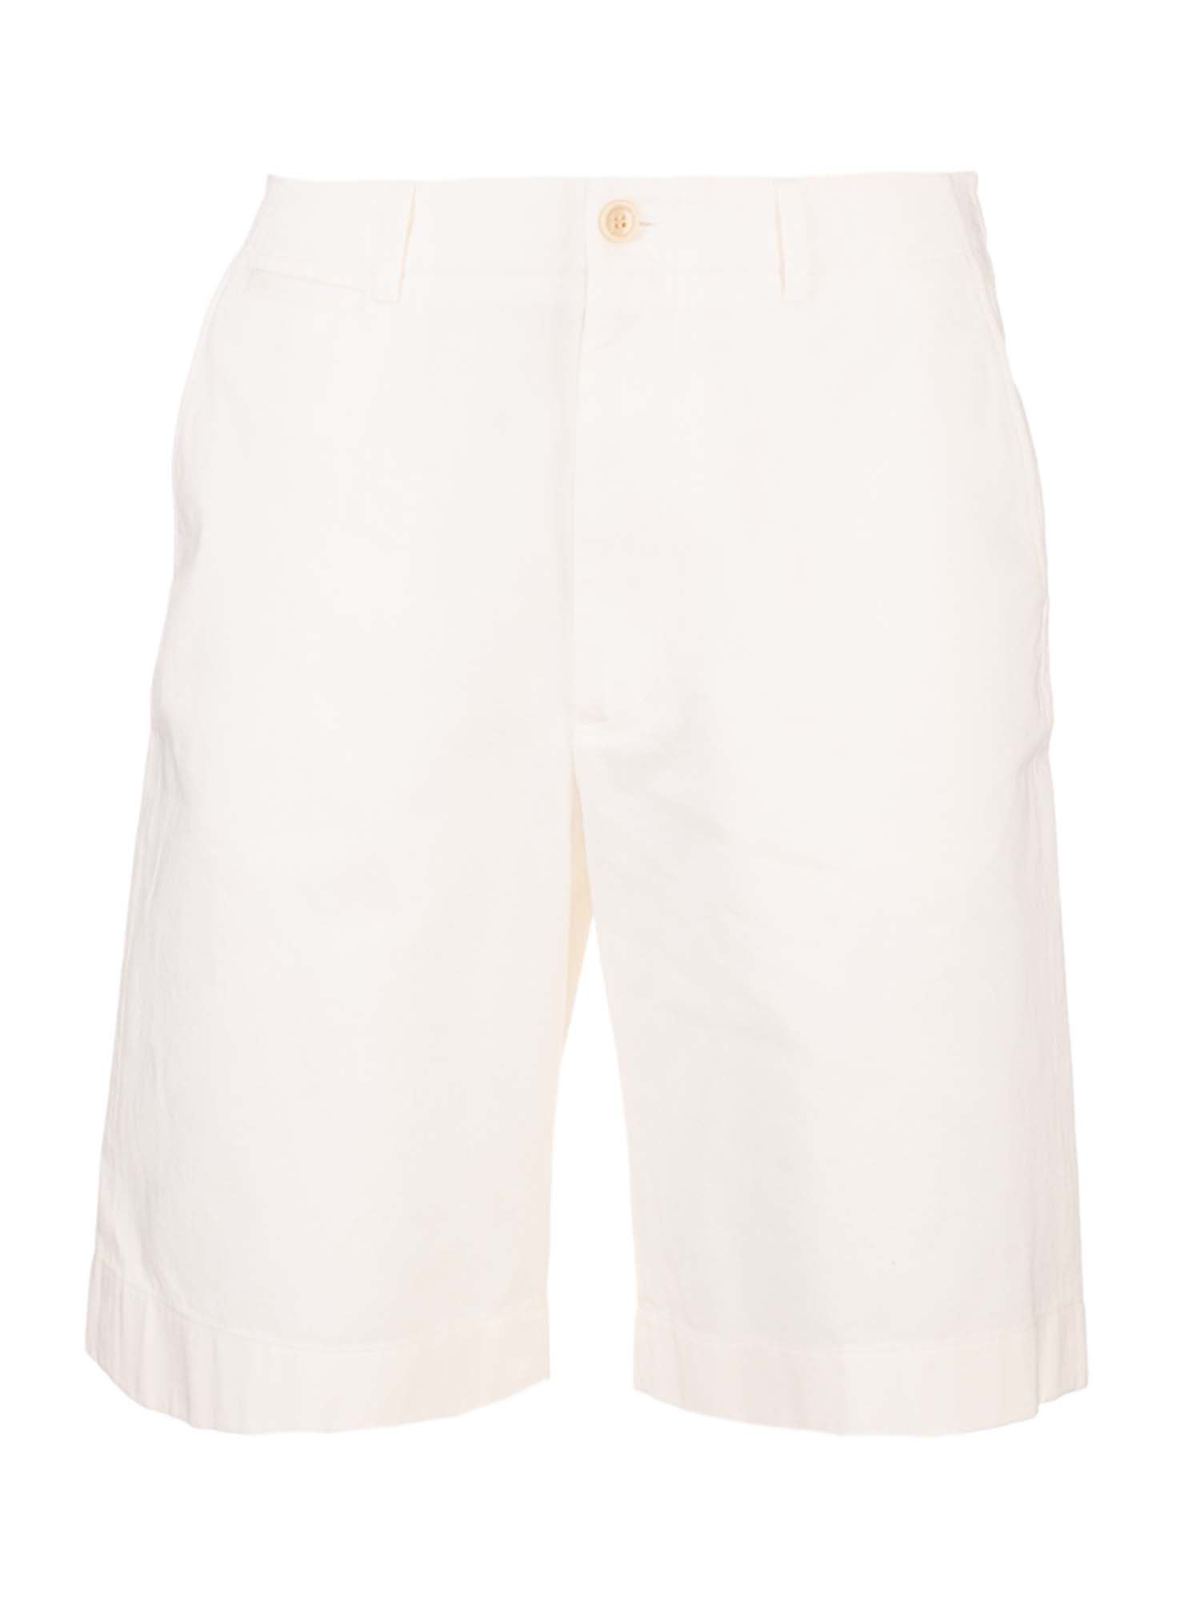 Gucci - Logo shorts in white - shorts 